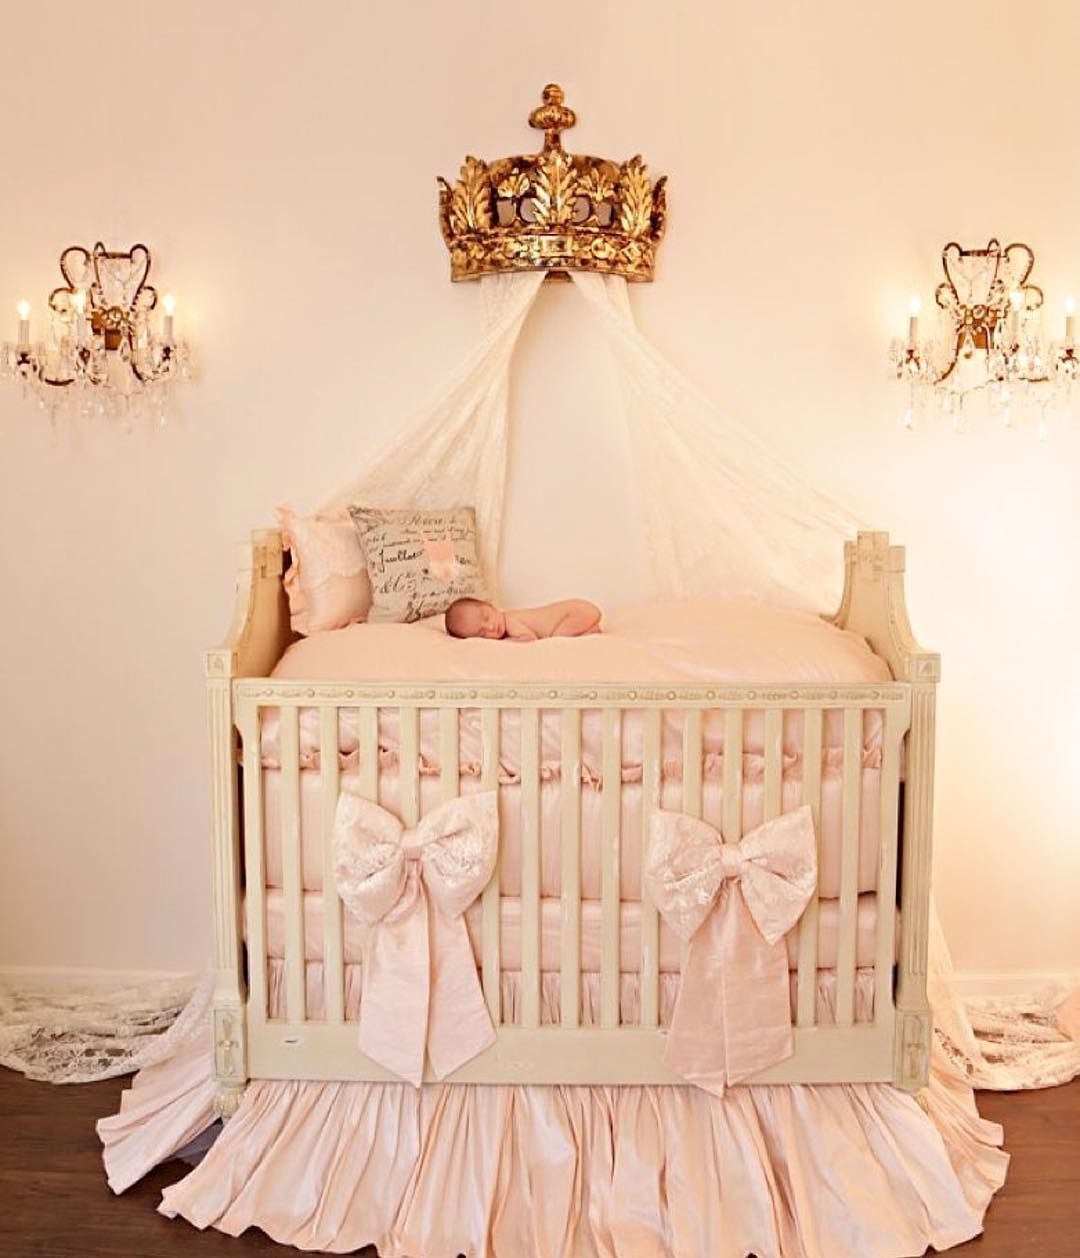 cute baby cribs